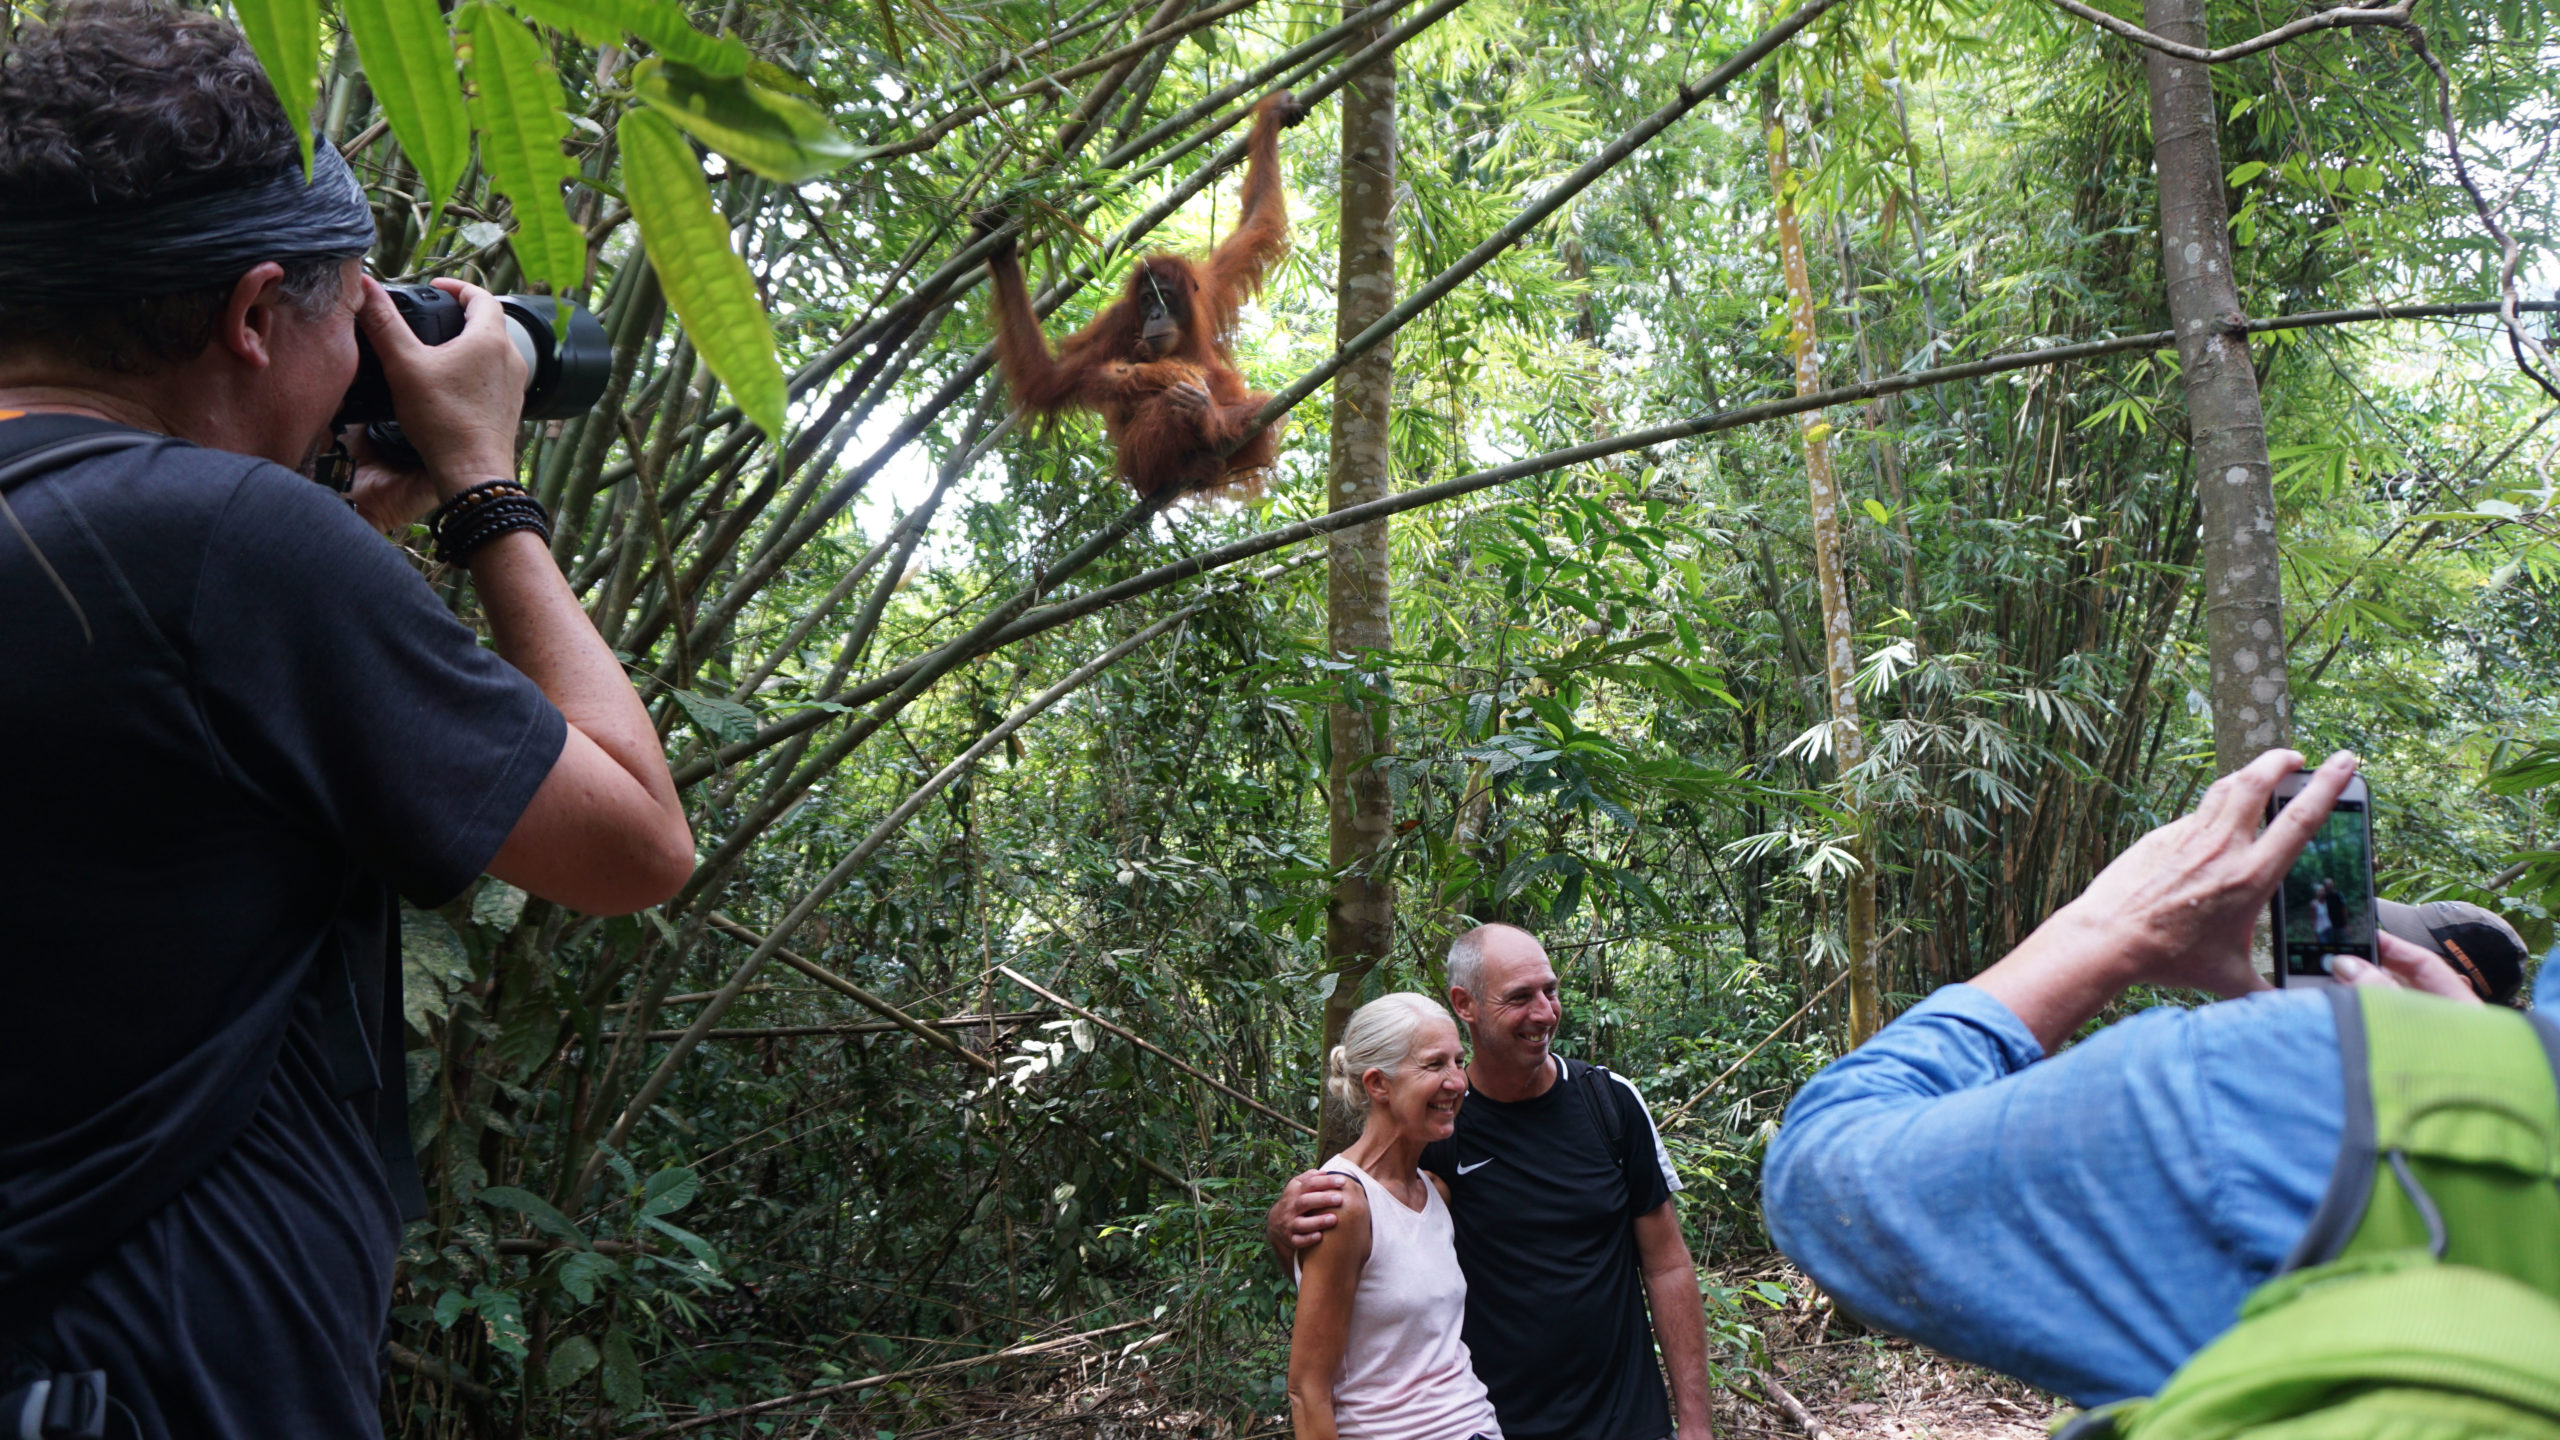 Tourists take selfies with an orangutan. Image by Nayla Azmi.